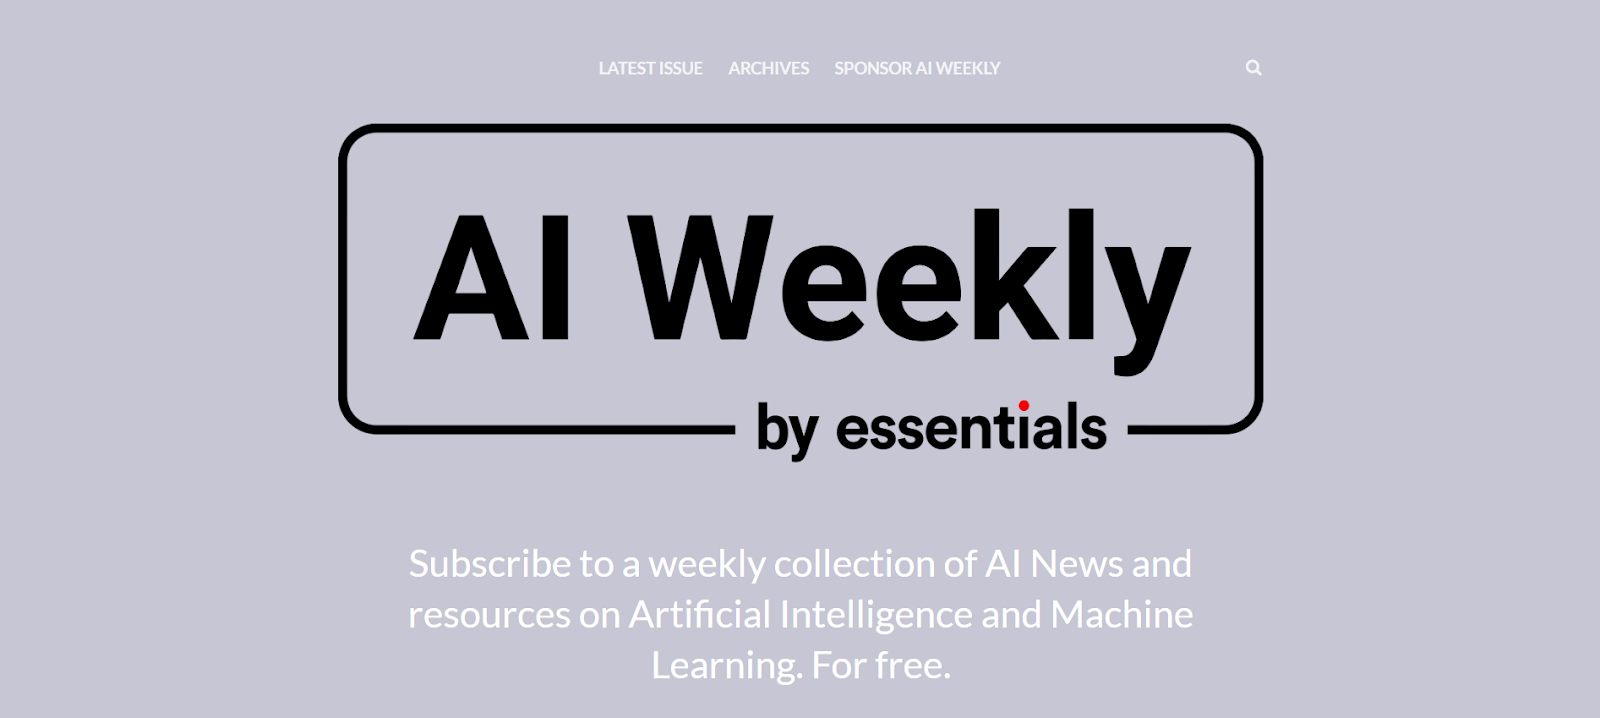 6. AI Weekly